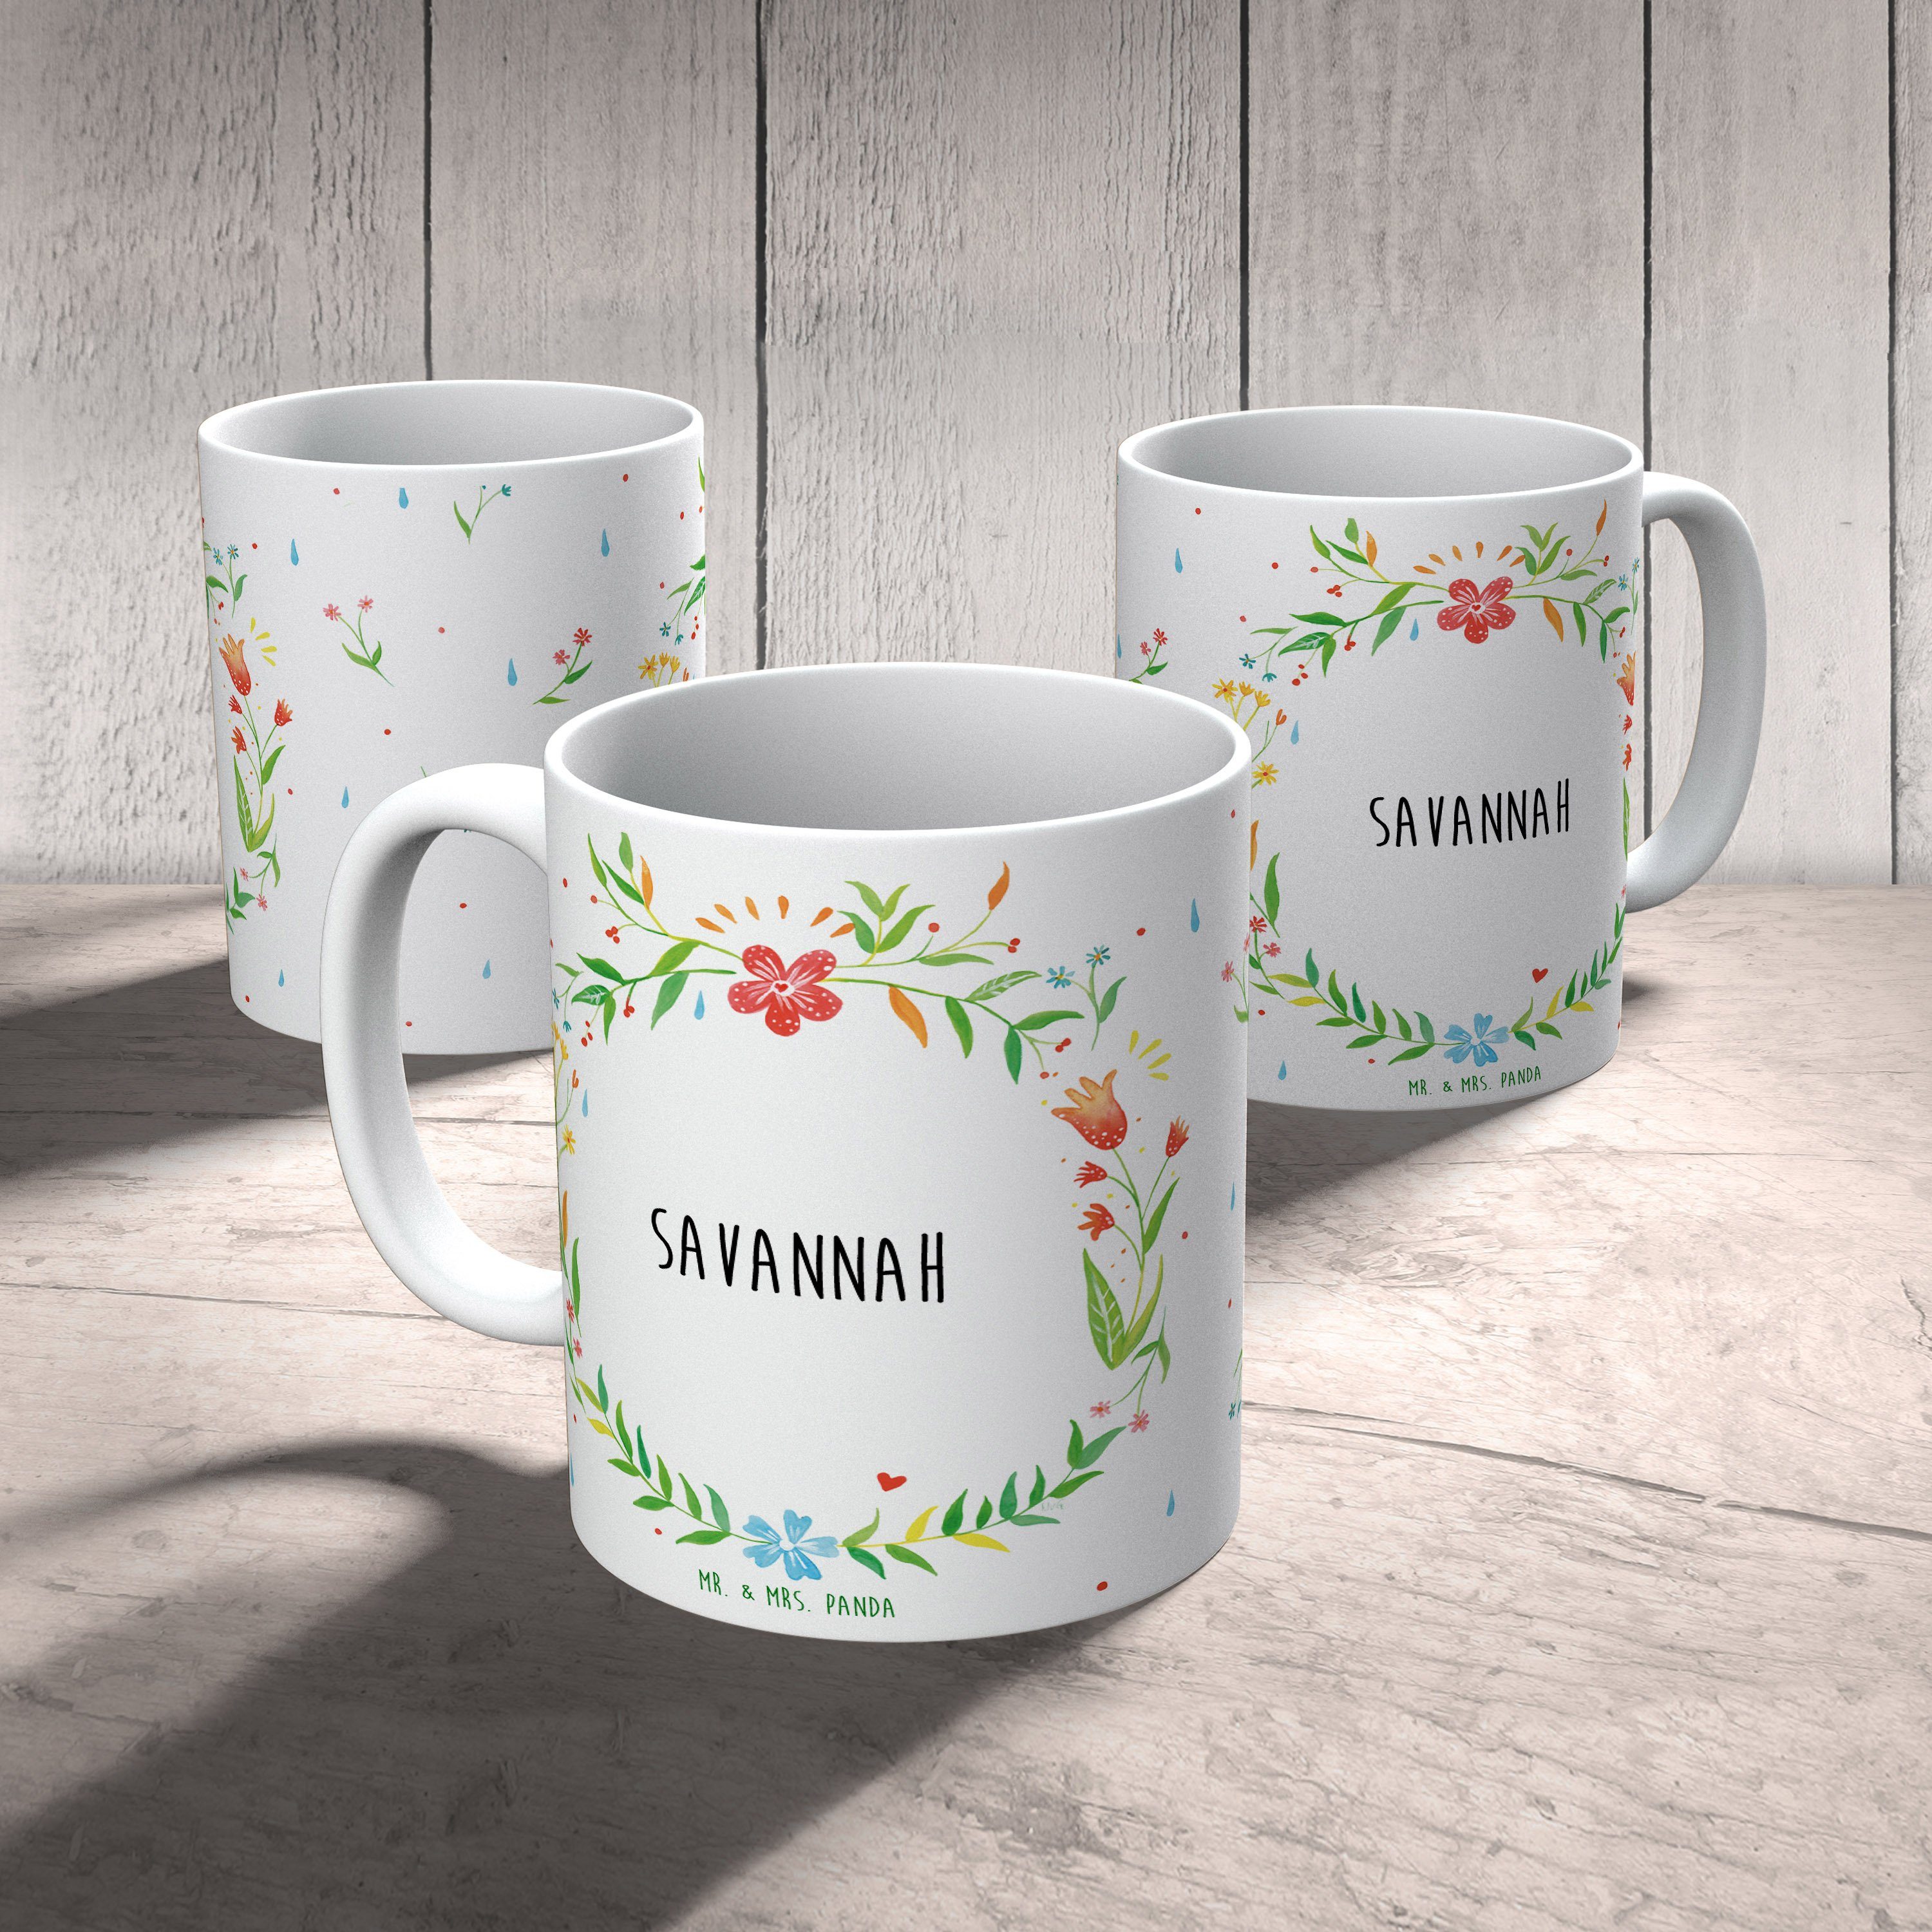 Mr. & Mrs. Panda Tasse Tasse Tasse, Keramik Geschenk, Büro Savannah Teebeche, - Kaffeetasse, Sprüche